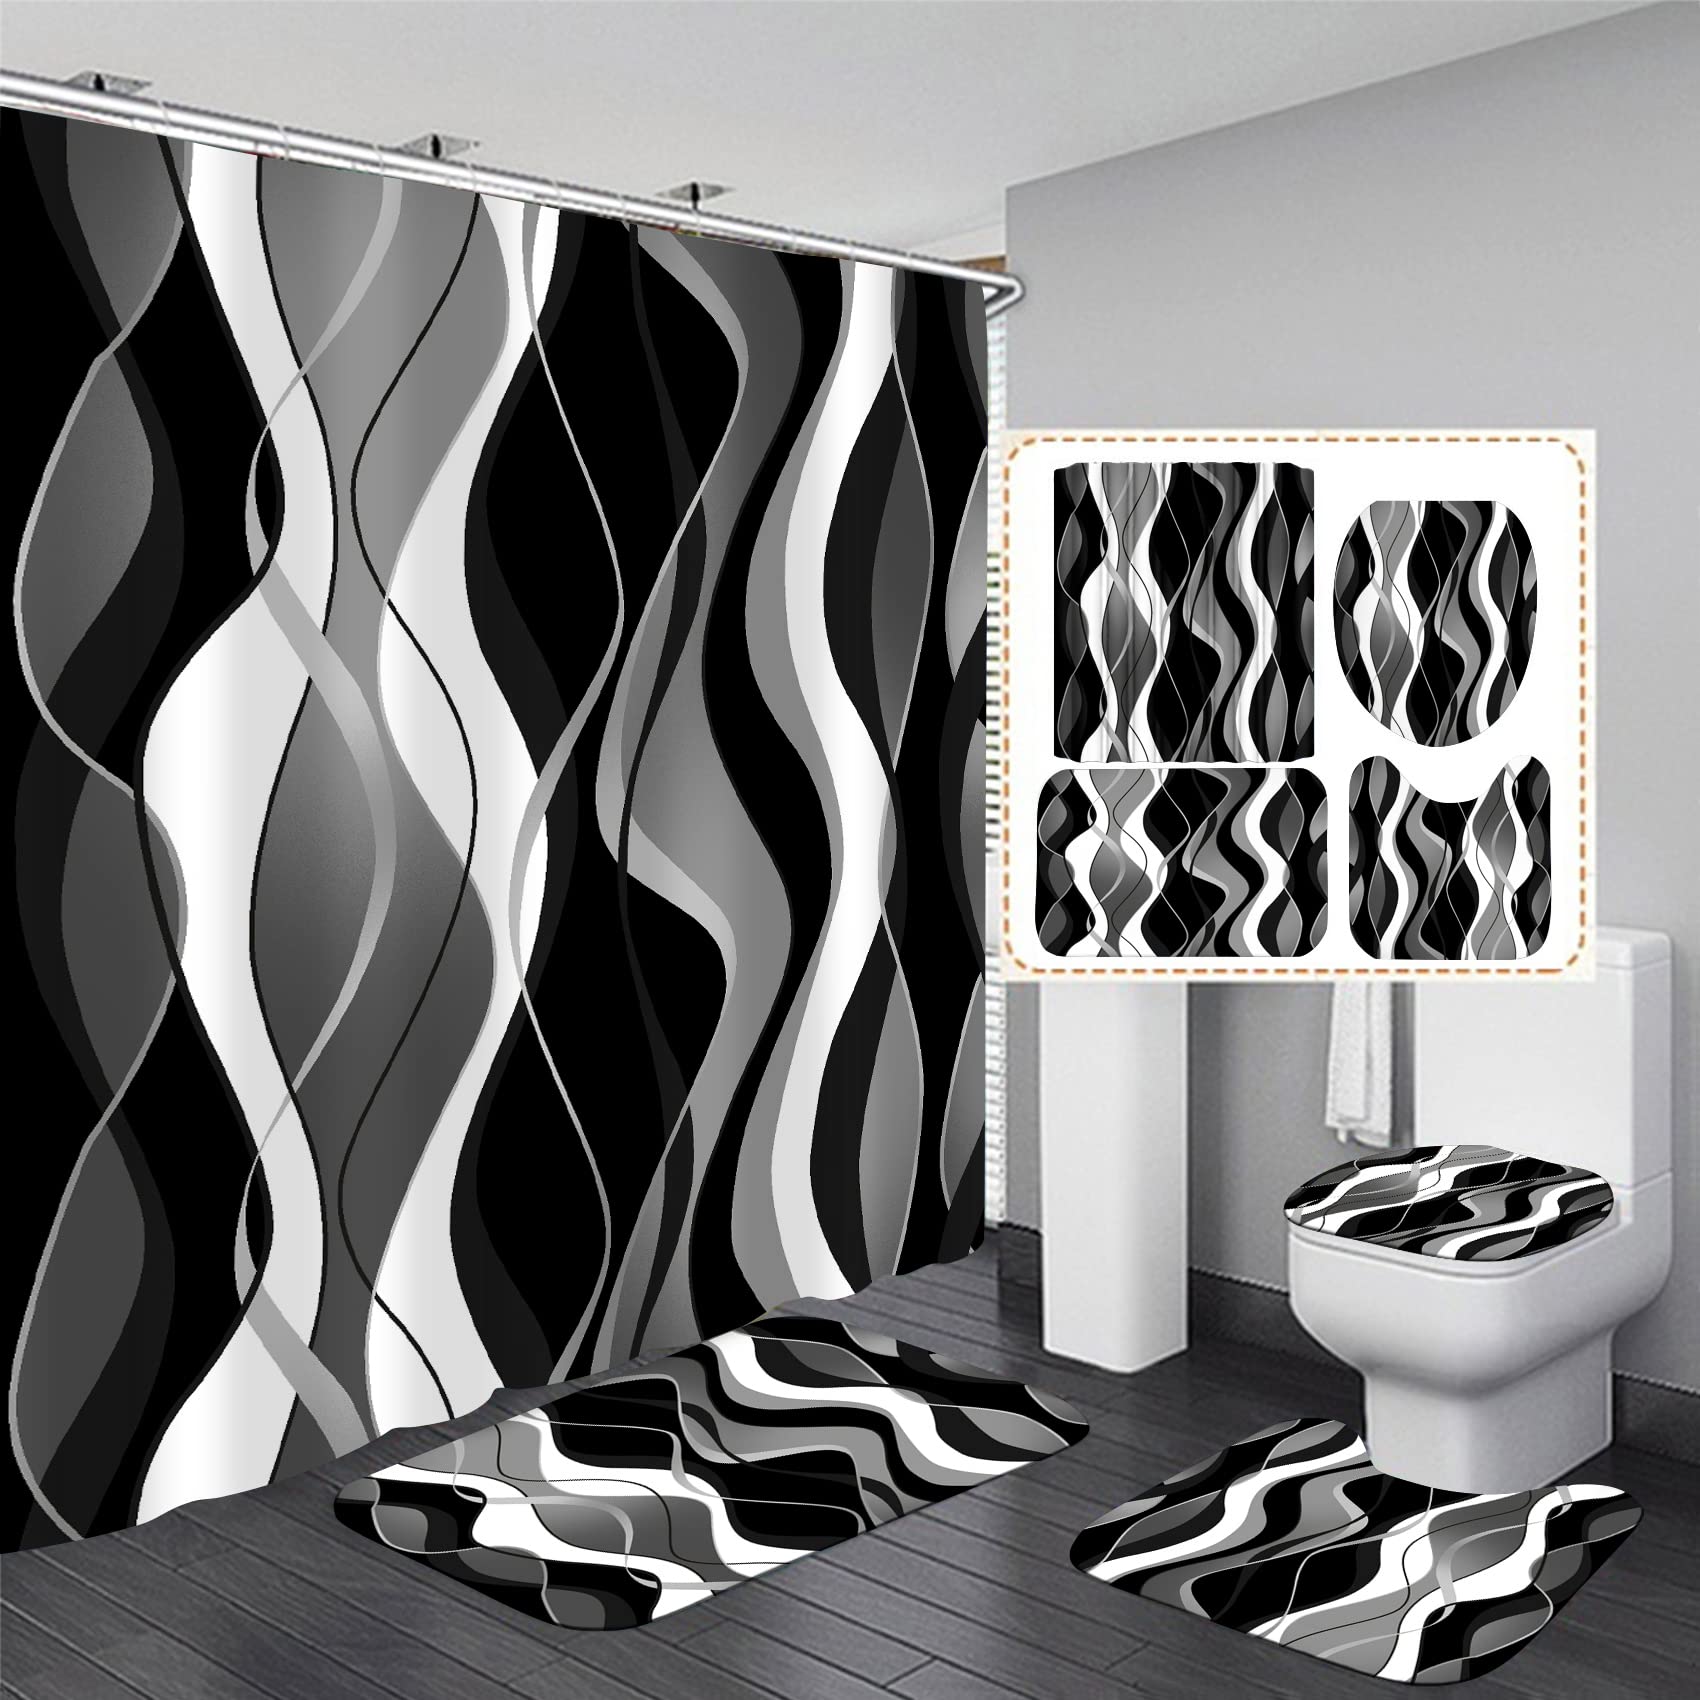 

4pcs Bathroom Sets Rugs Shower Curtain, Geometric Pattern Shower Curtain With Hooks, Non-slip Bathroom Rug, Toilet U-shape Mat, Toilet Lid Cover Pad, Bathroom Decor